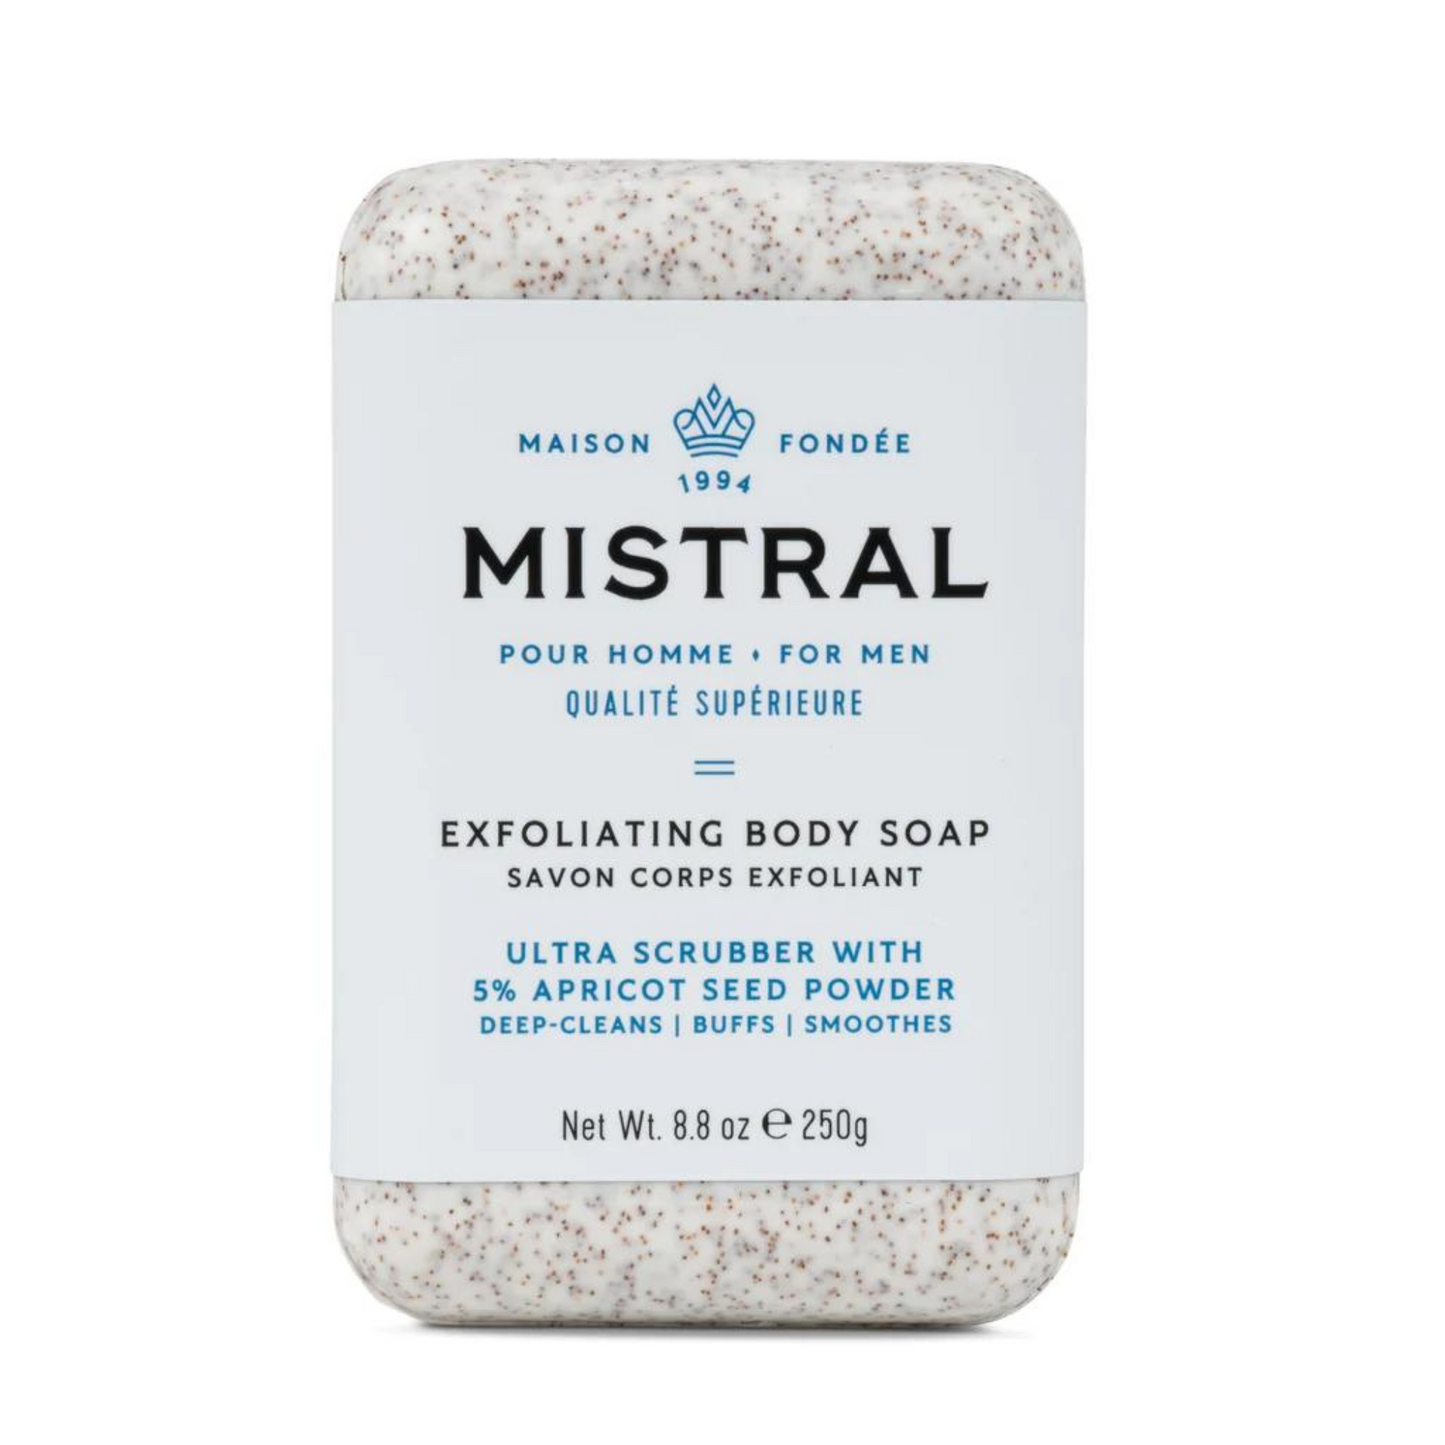 Primary Image of Mistral Exfoliating Body Soap (8.8 oz)